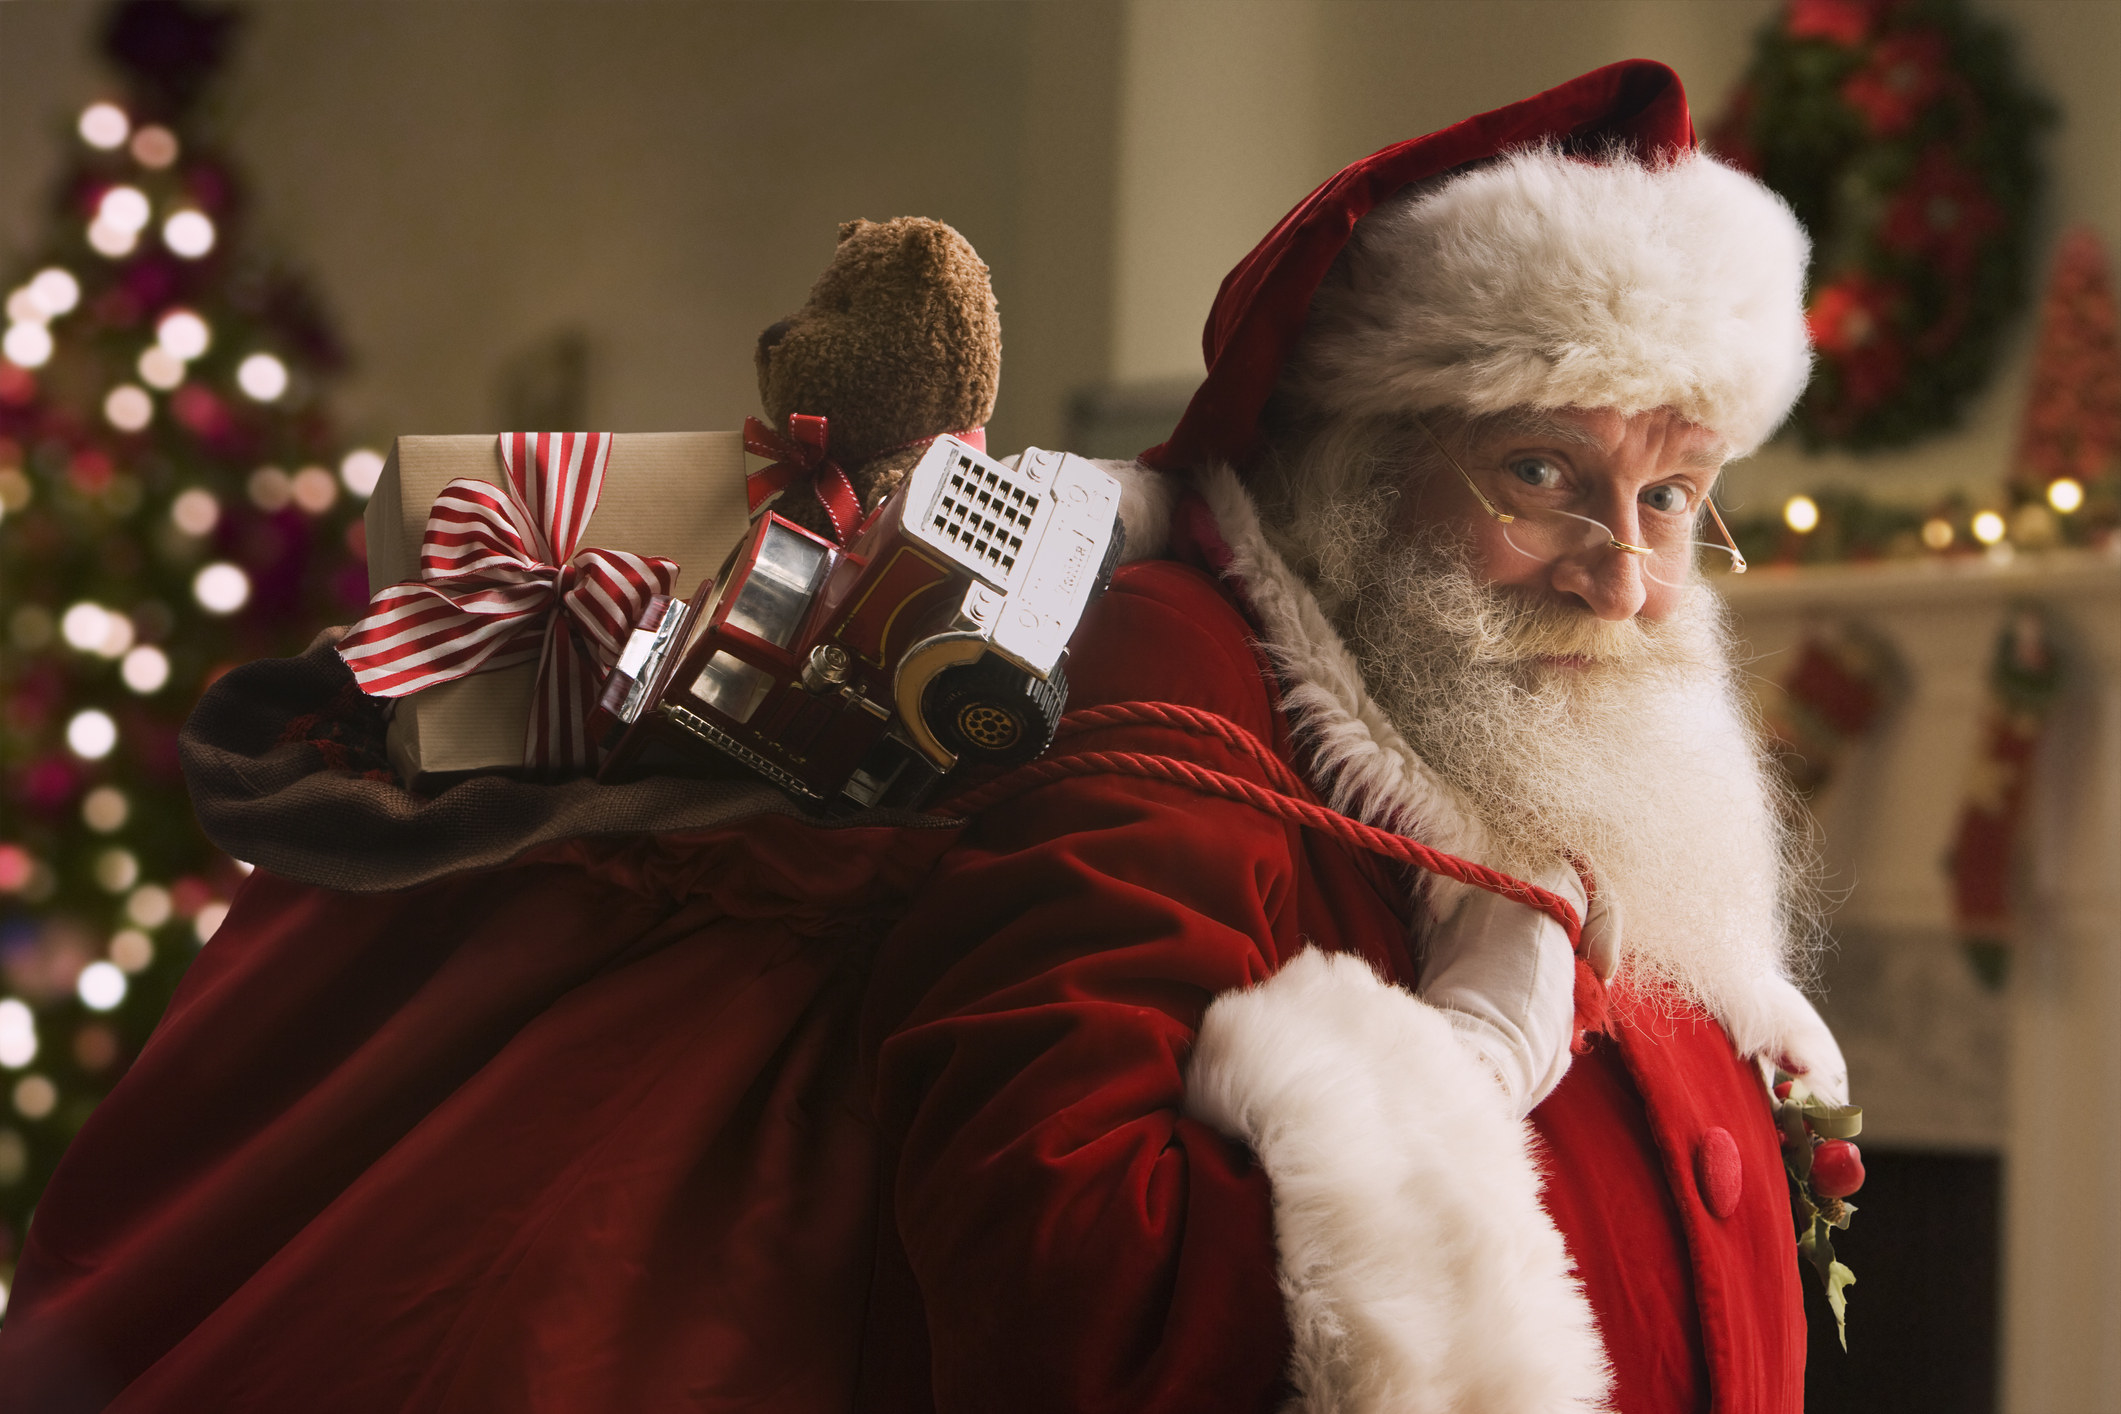 Santa smirking as he carries a bag full of toys